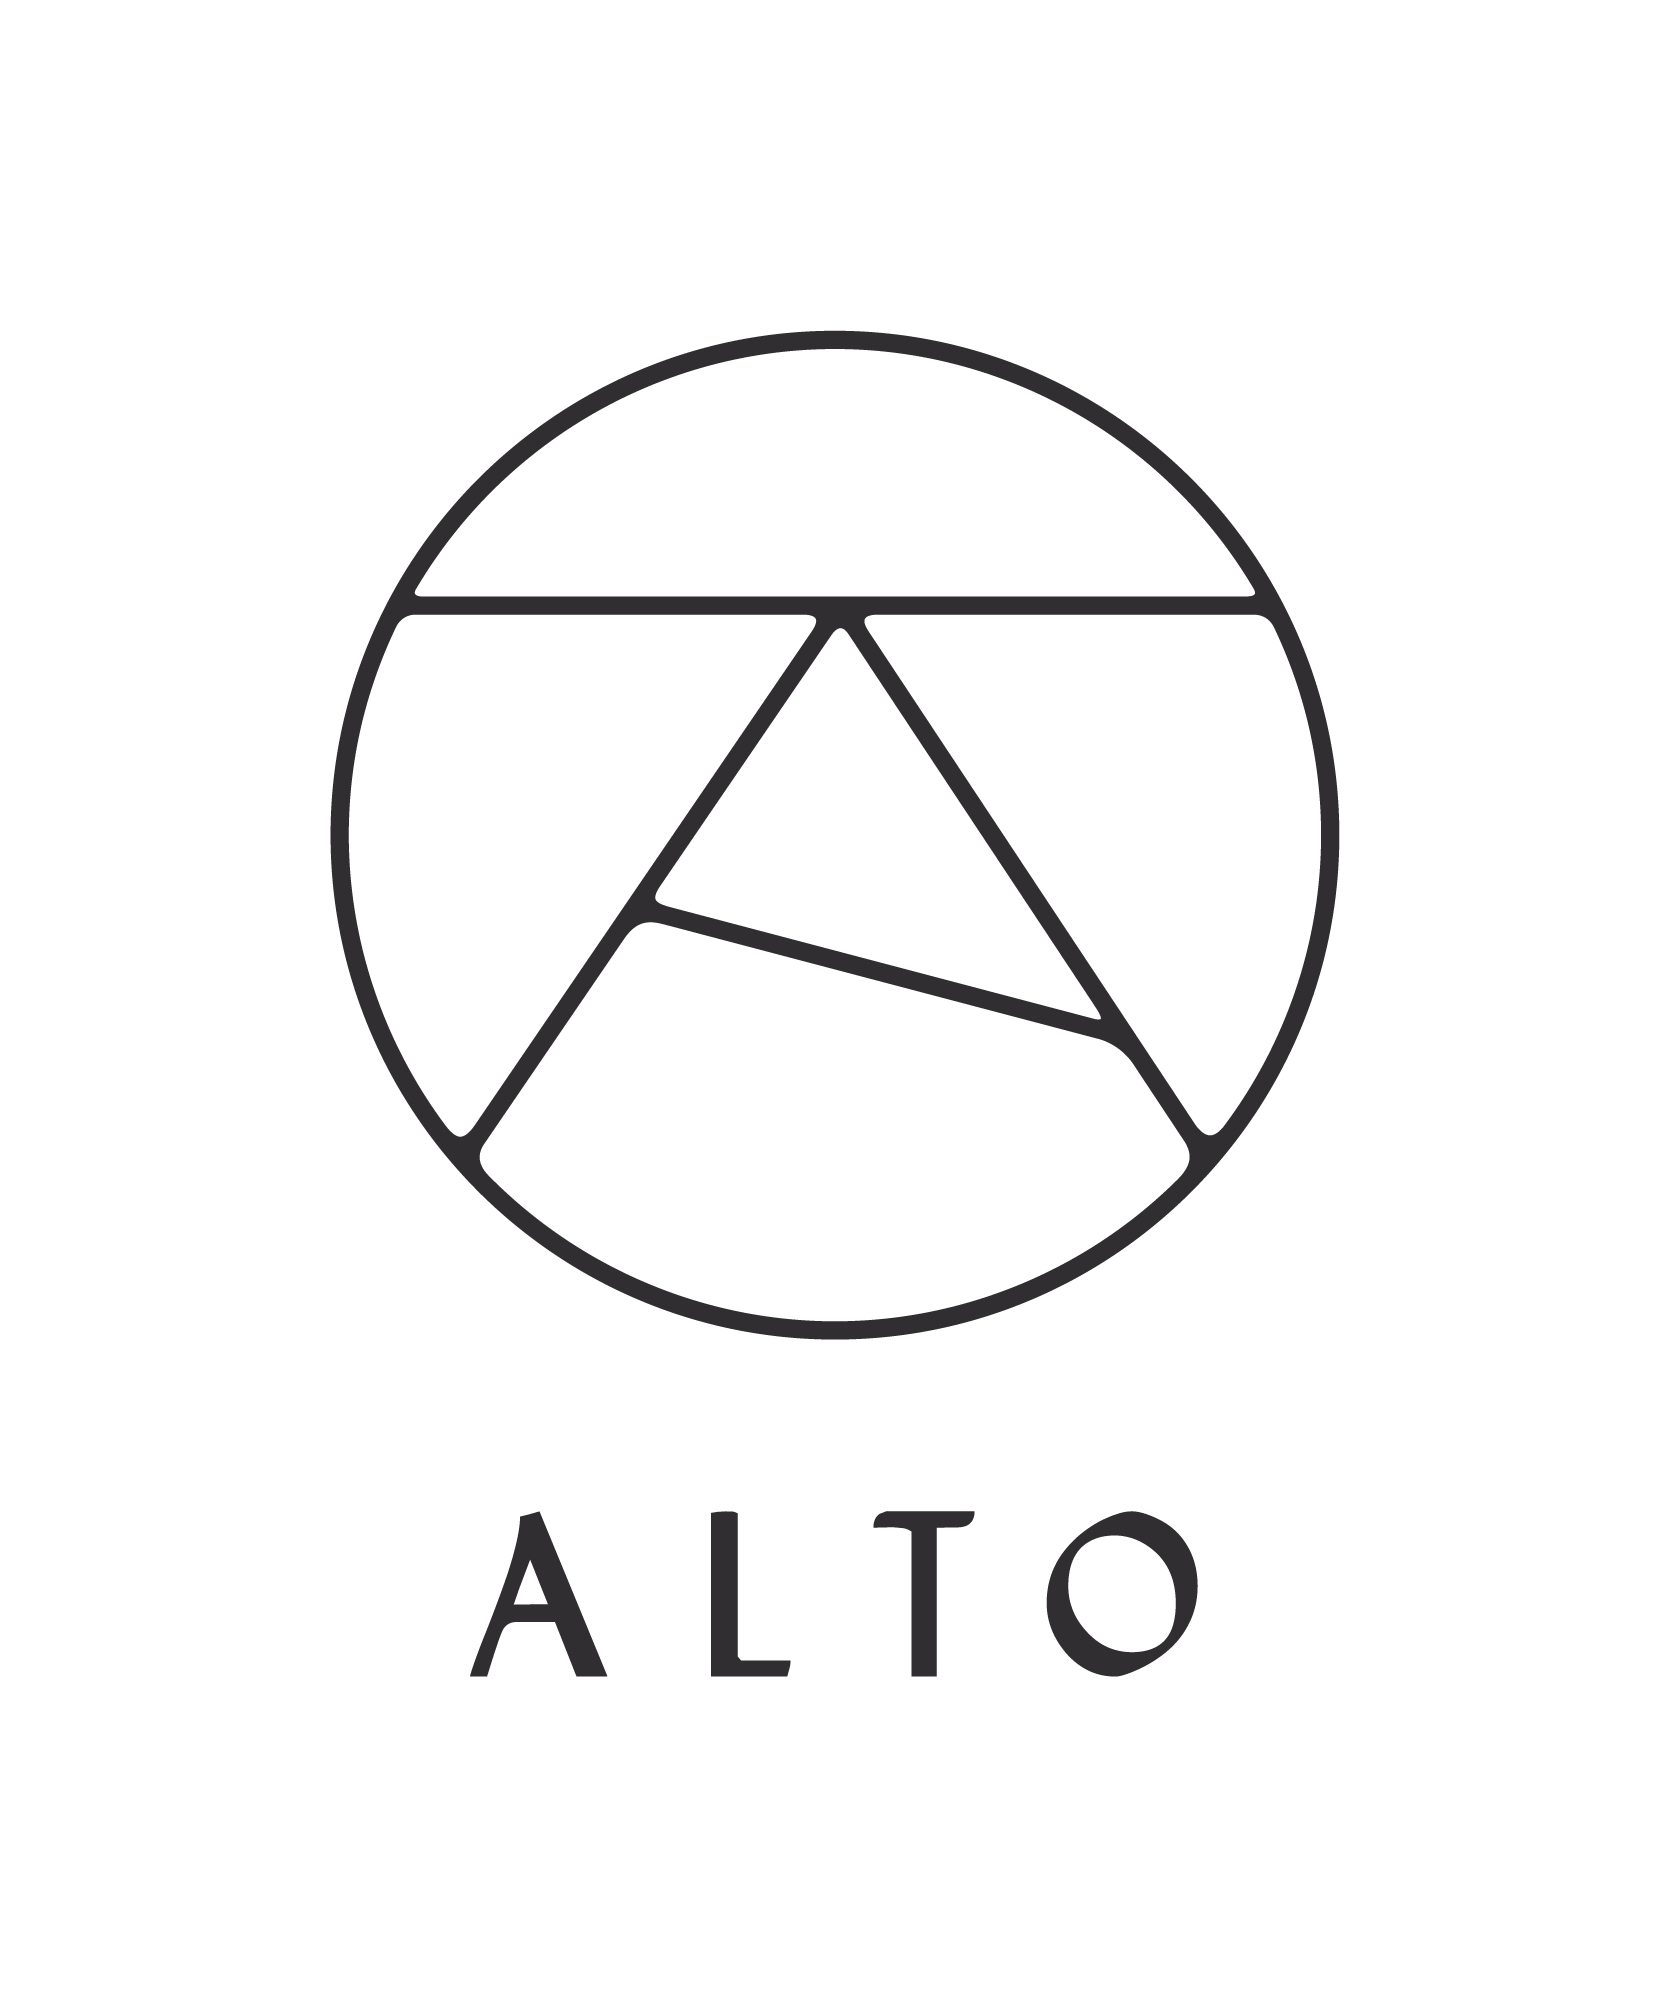 Alto Announces Closing of $45M Series B Financing